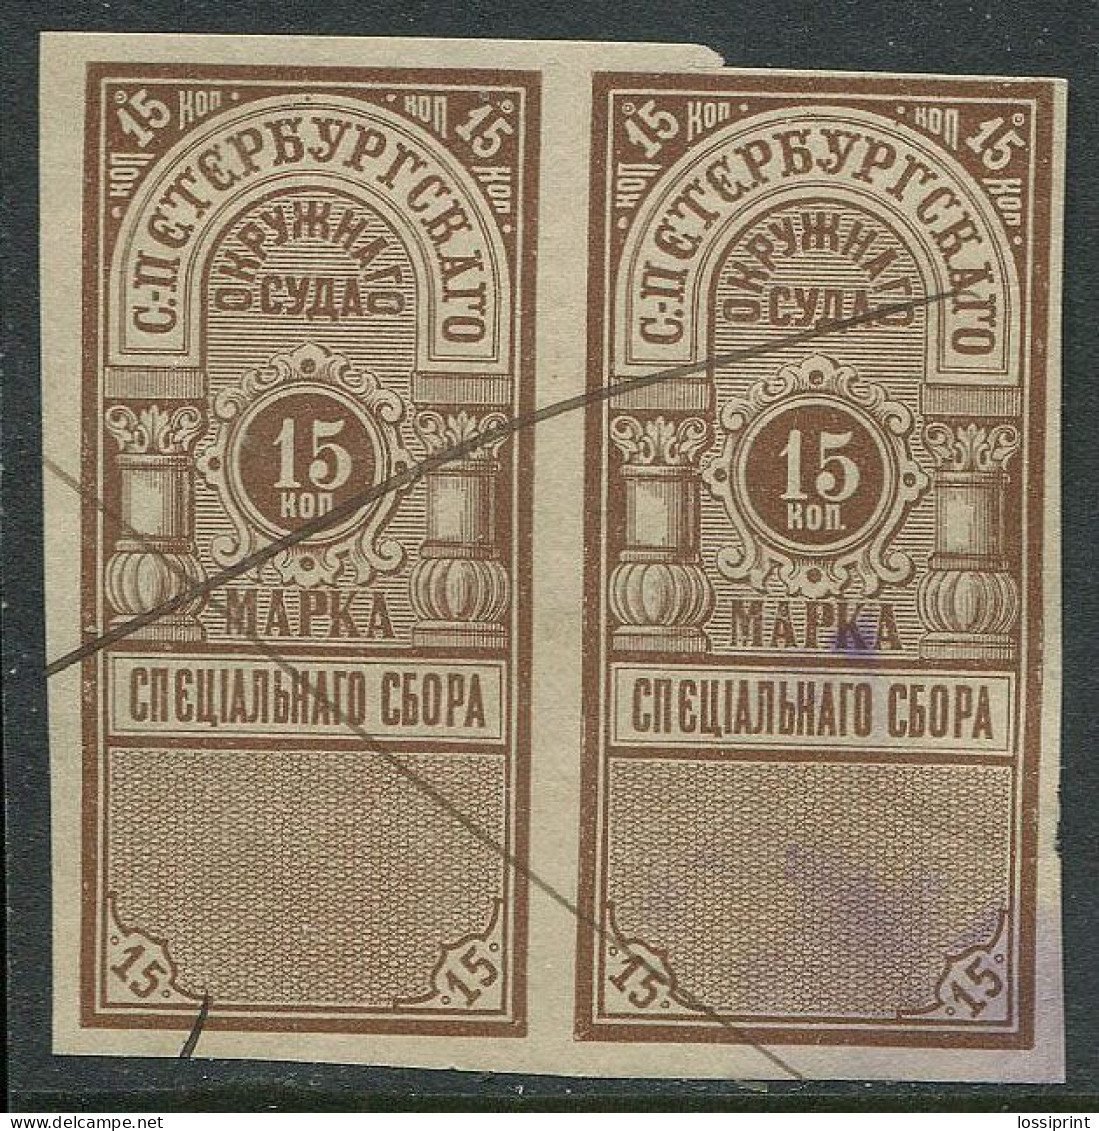 Russia:Used 15 Copecks Revenue Stamps Pair, Pre 1916 - Revenue Stamps